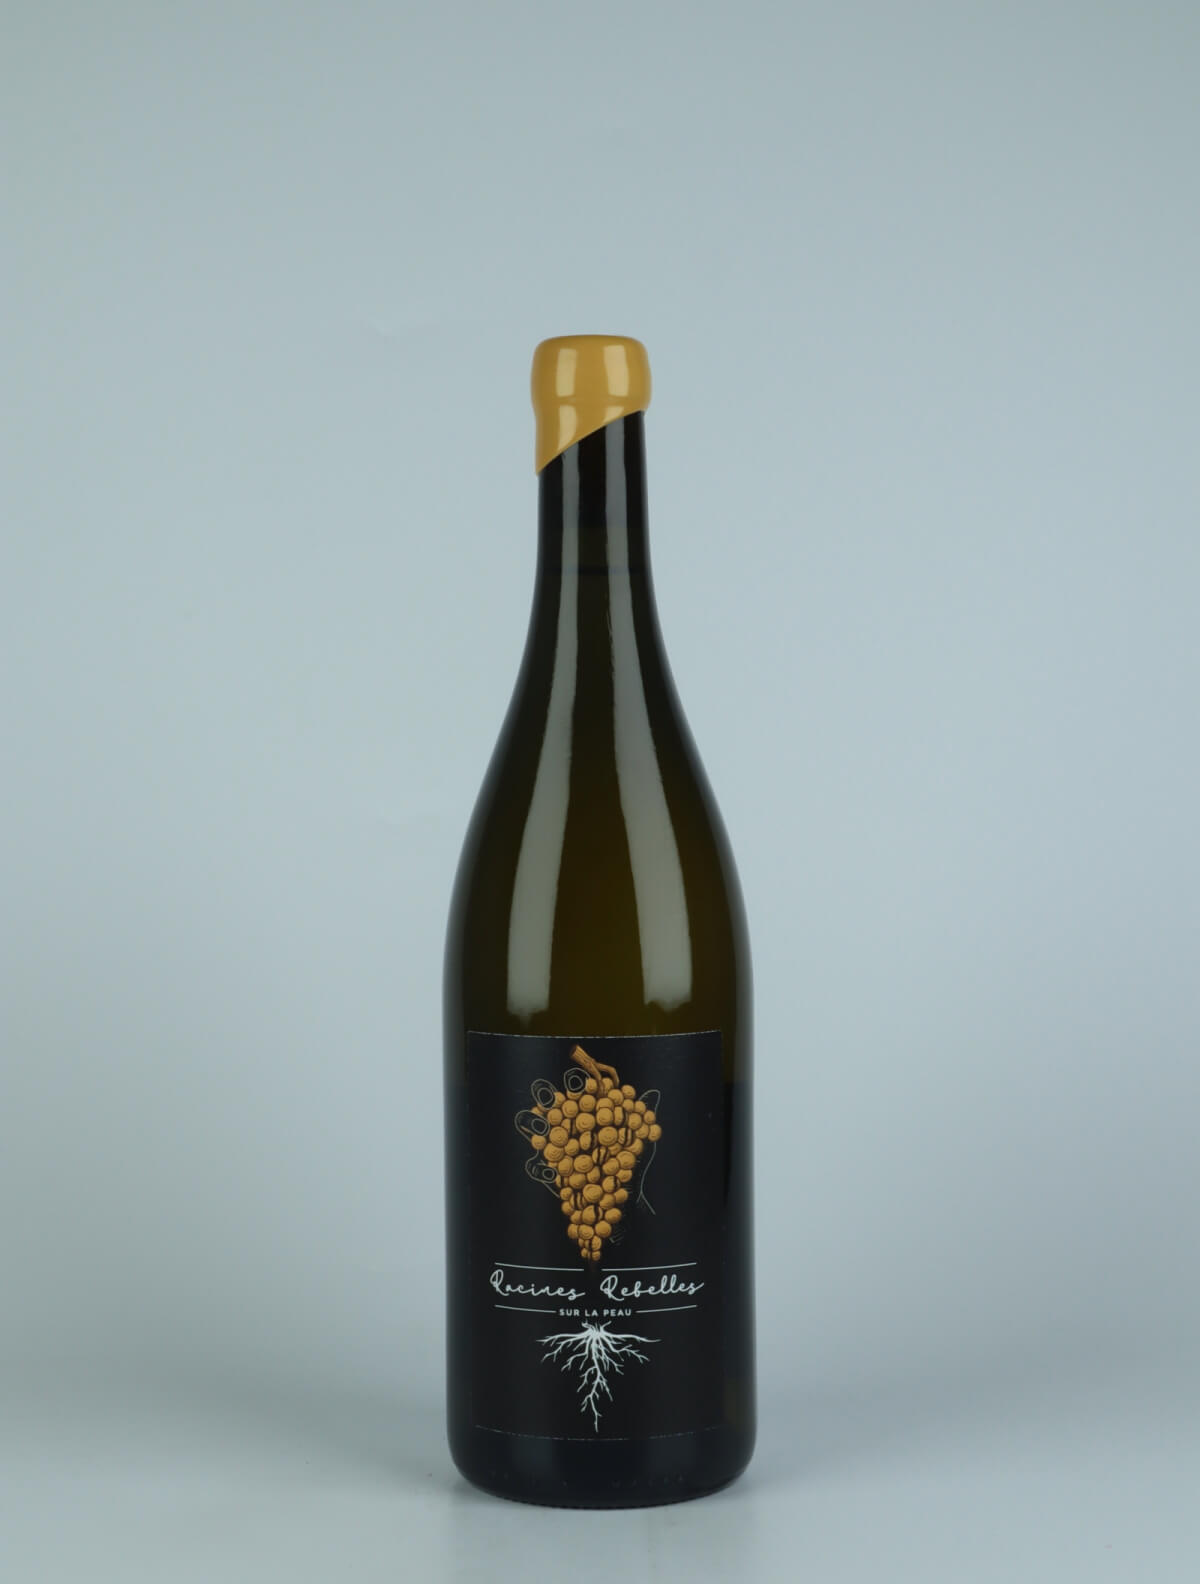 A bottle 2020 Sur la Peau White wine from Racines Rebelles, Moselle in Luxemburg